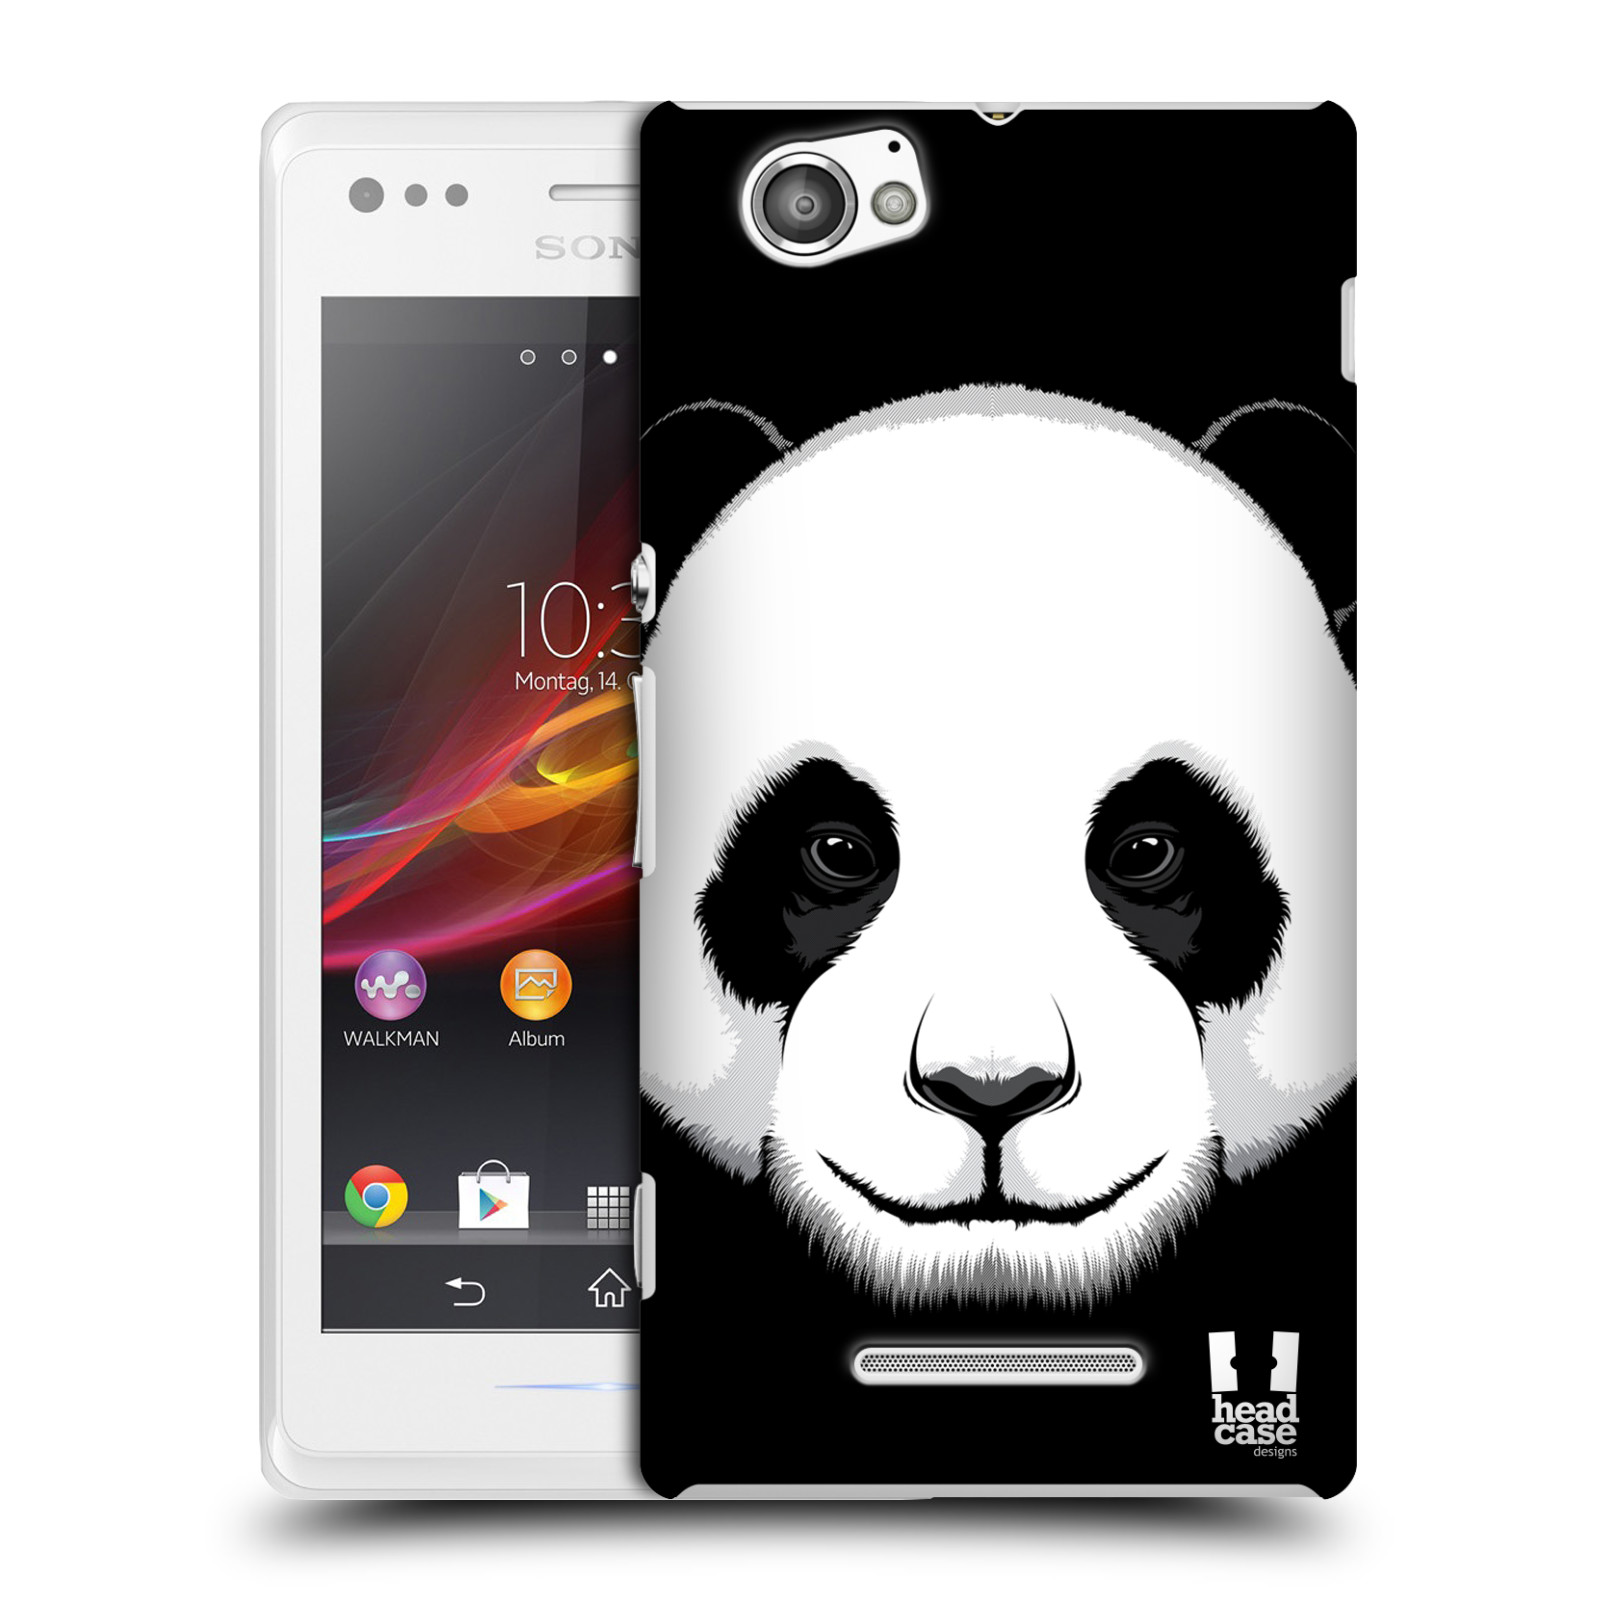 HEAD CASE plastový obal na mobil Sony Xperia M vzor Zvíře kreslená tvář panda